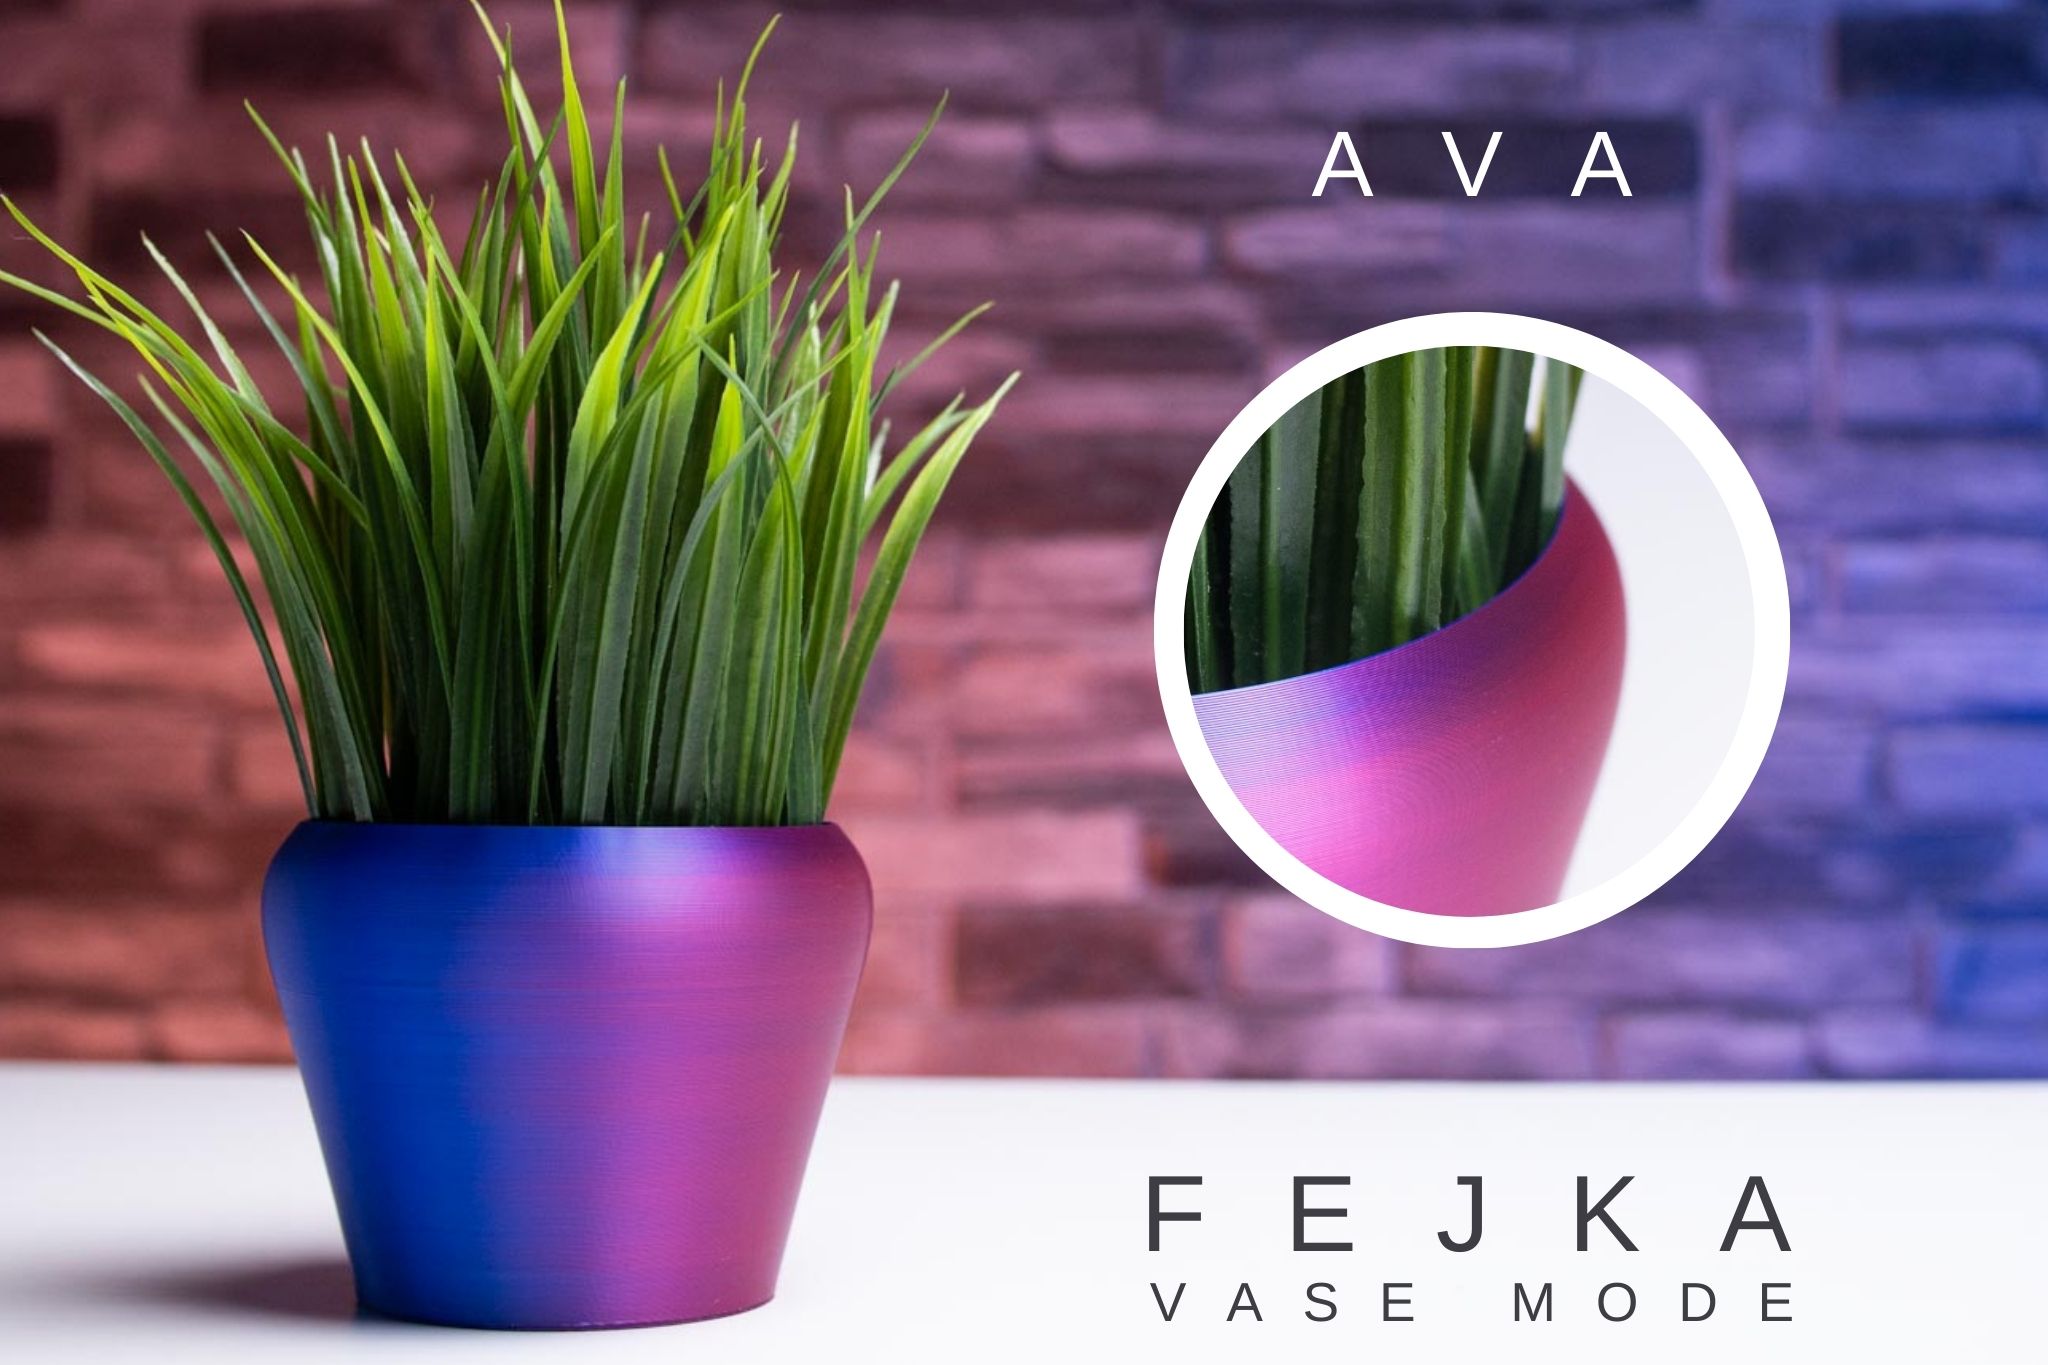 3D Printed Planter and Pot for Ikea Fejka - Vase AVA